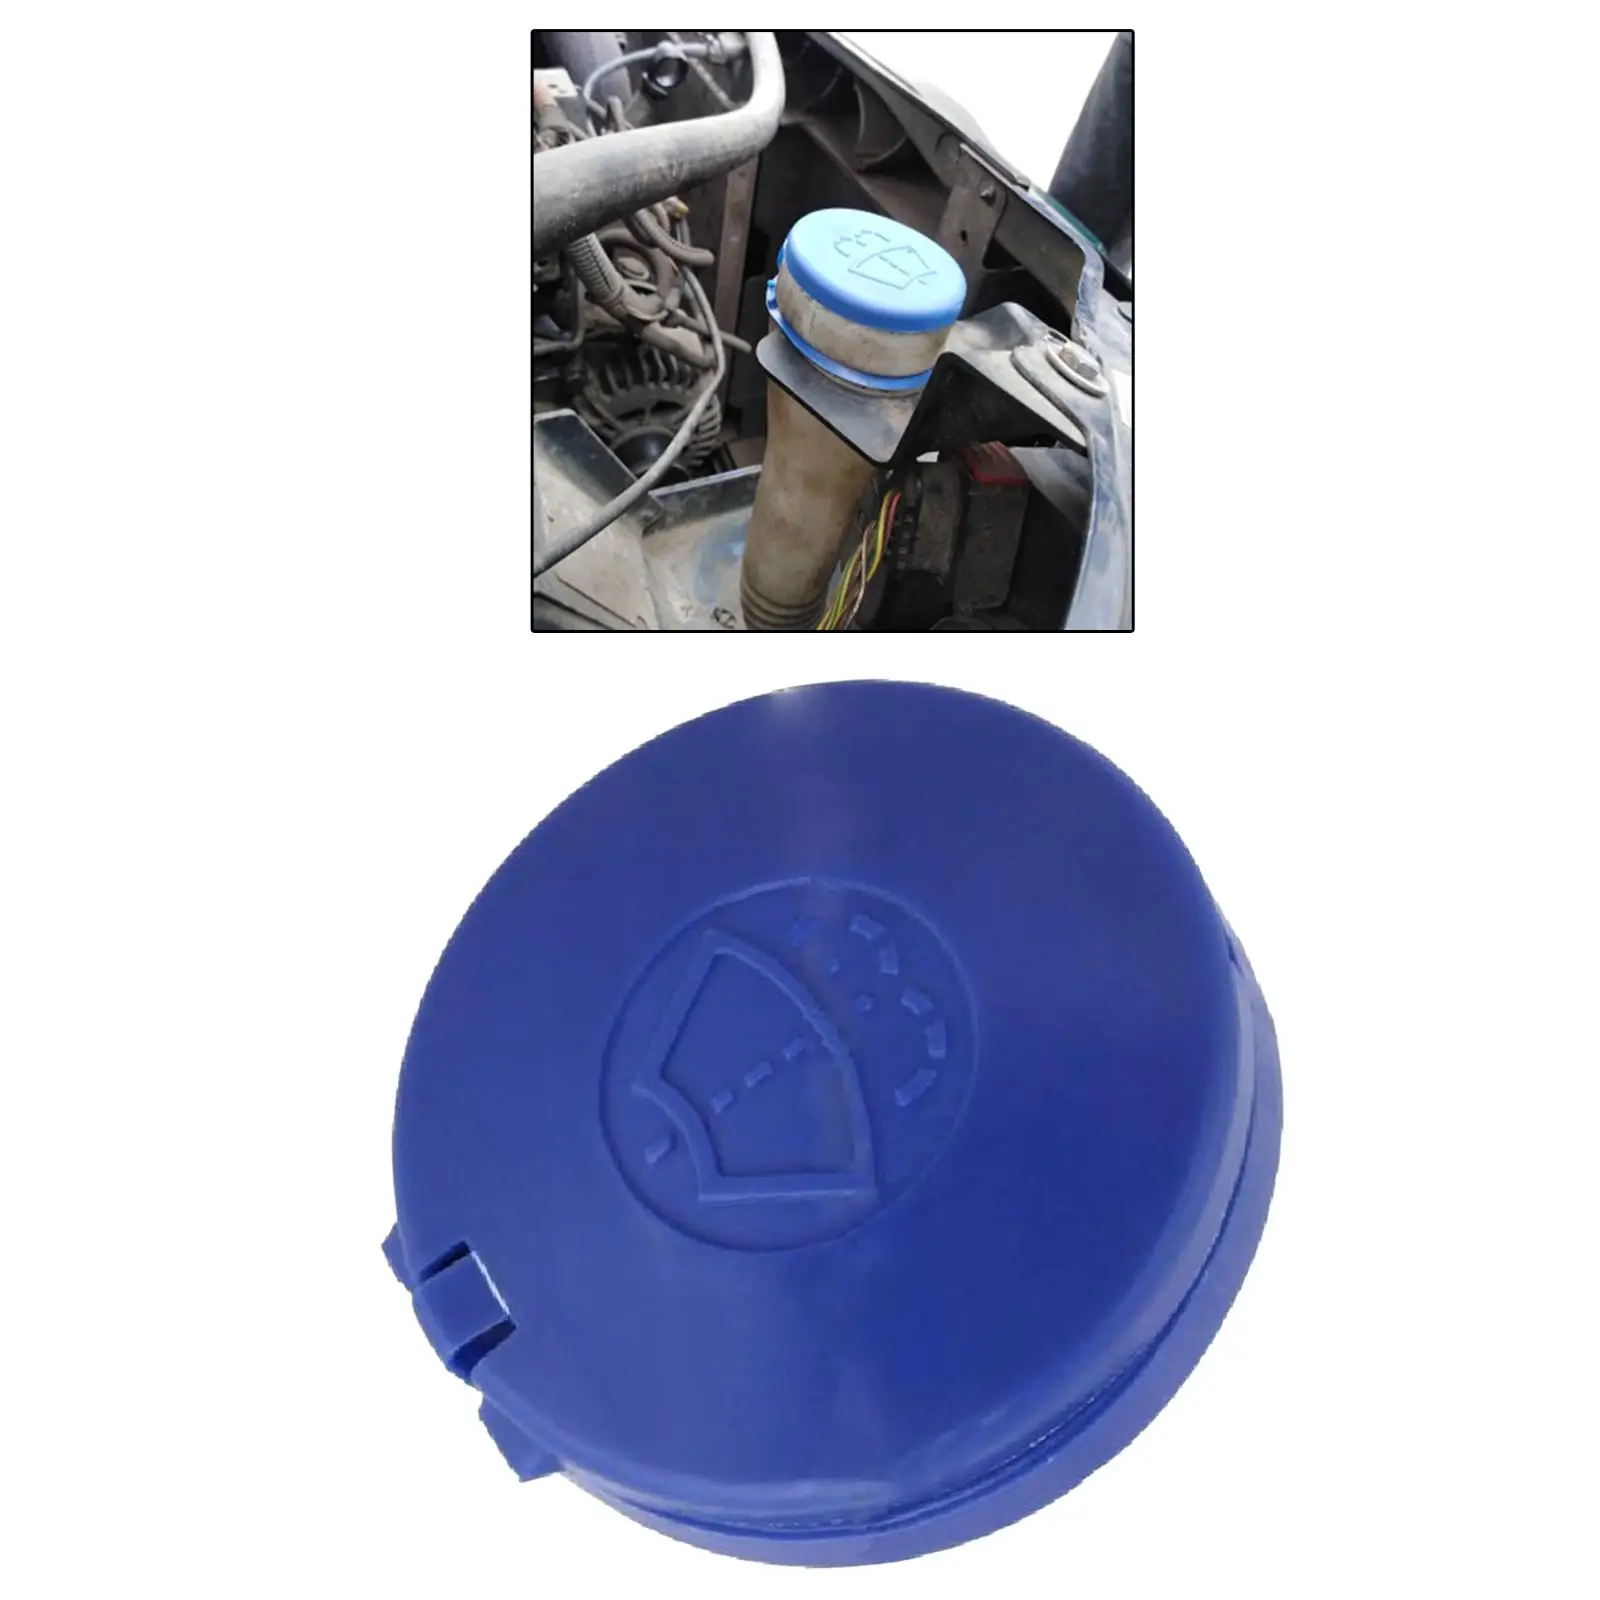 643238 Washer Fluid Bottle Cap Blue ABS Durable Windshield Wiper Reservoir Cap for Peugeot Replace Auto Accessories Parts